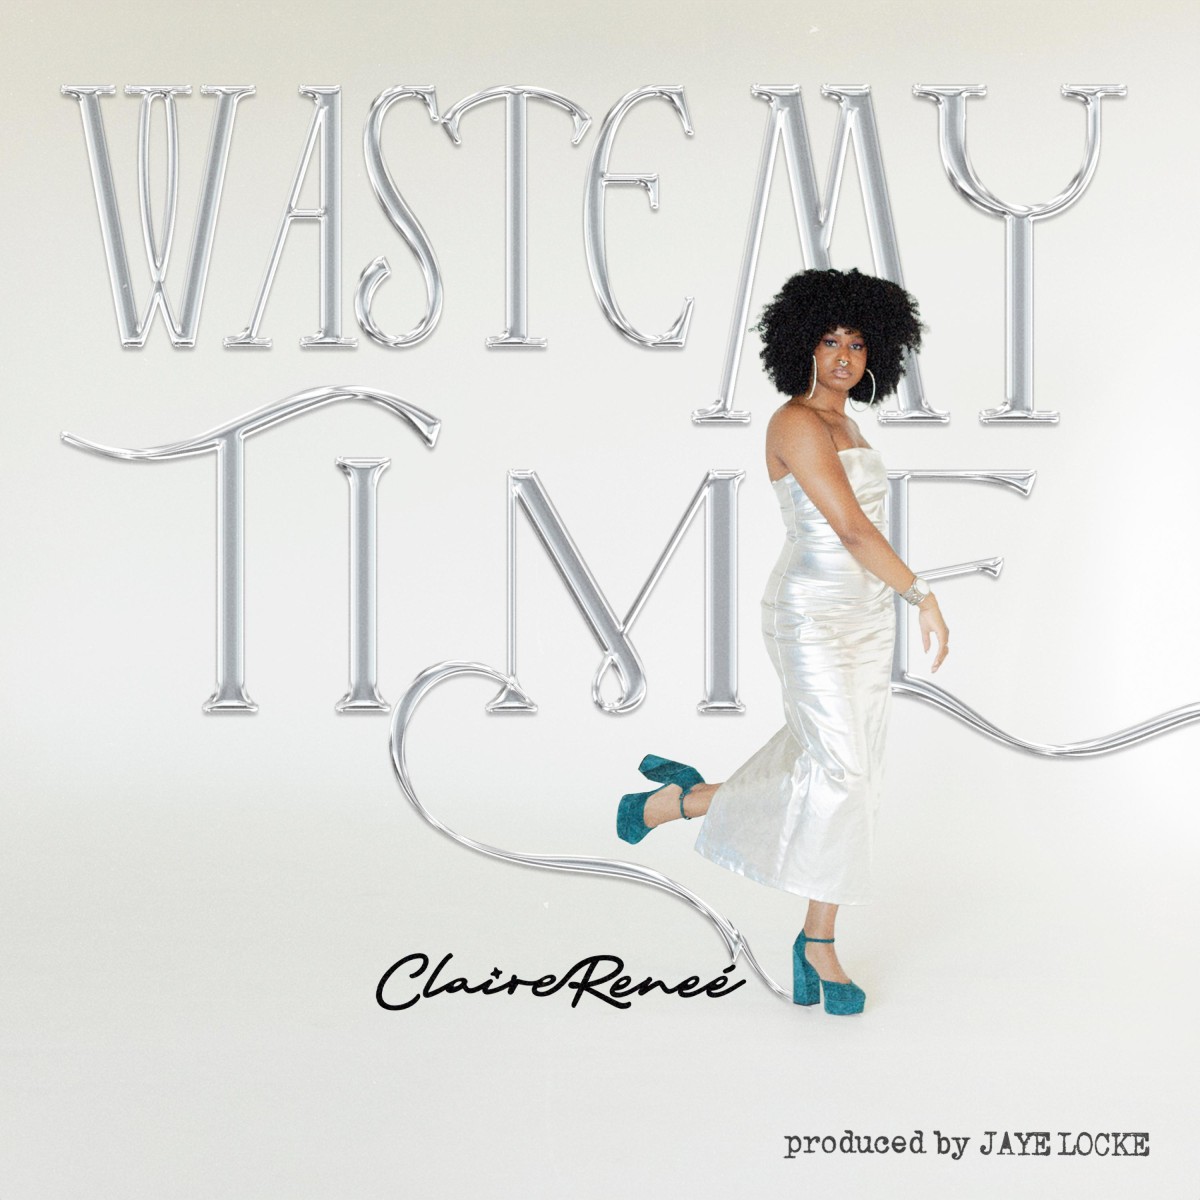 Claire Reneé “Waste My Time” single artwork